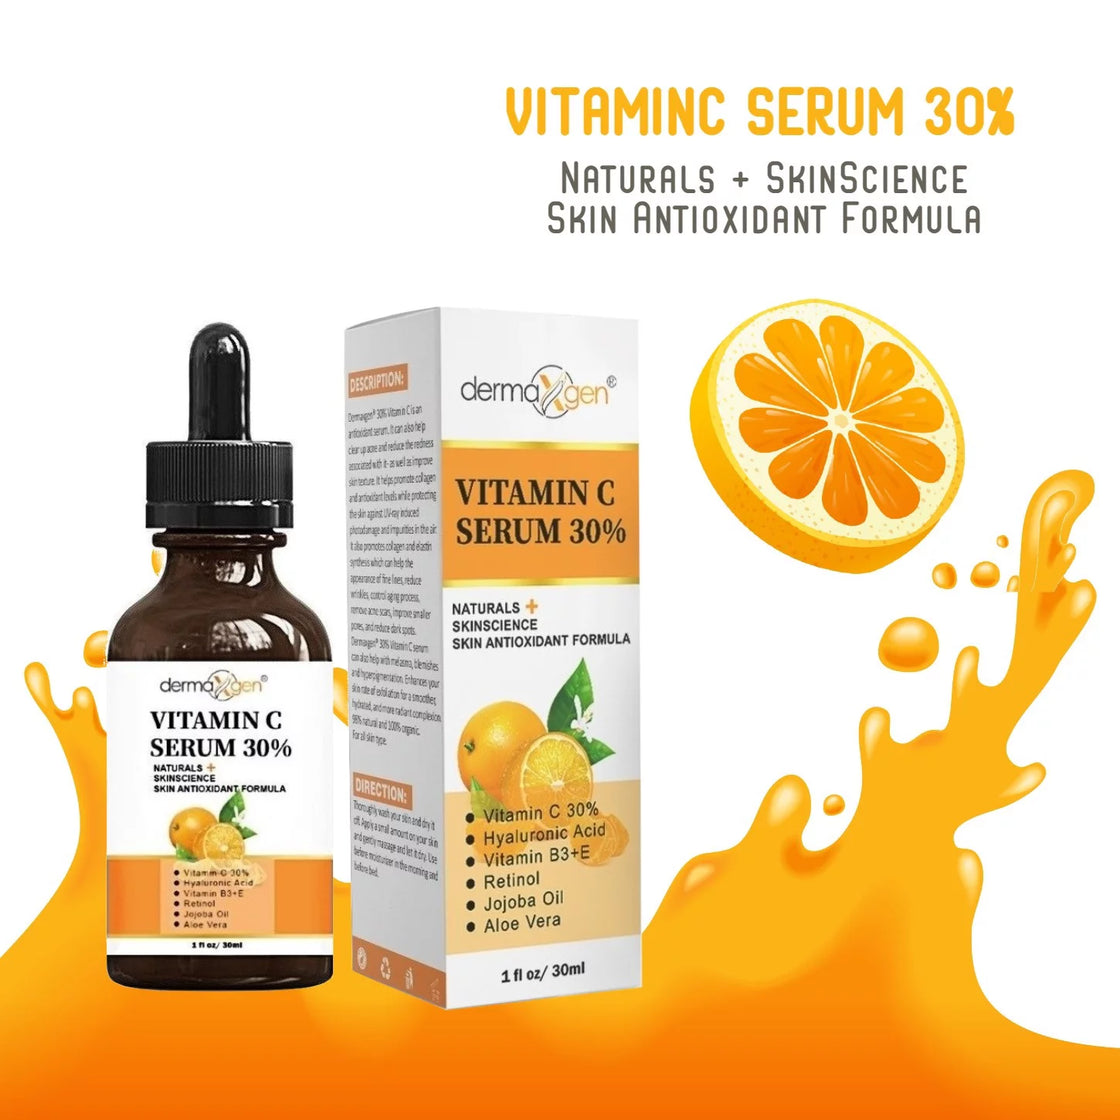 PURE Vitamin C 30% + Retinol + Hyaluronic Acid + Aloe Vera + JOJOBA OIL - ORGANIC ANTI-AGING SERUM - 8 FL OZ.